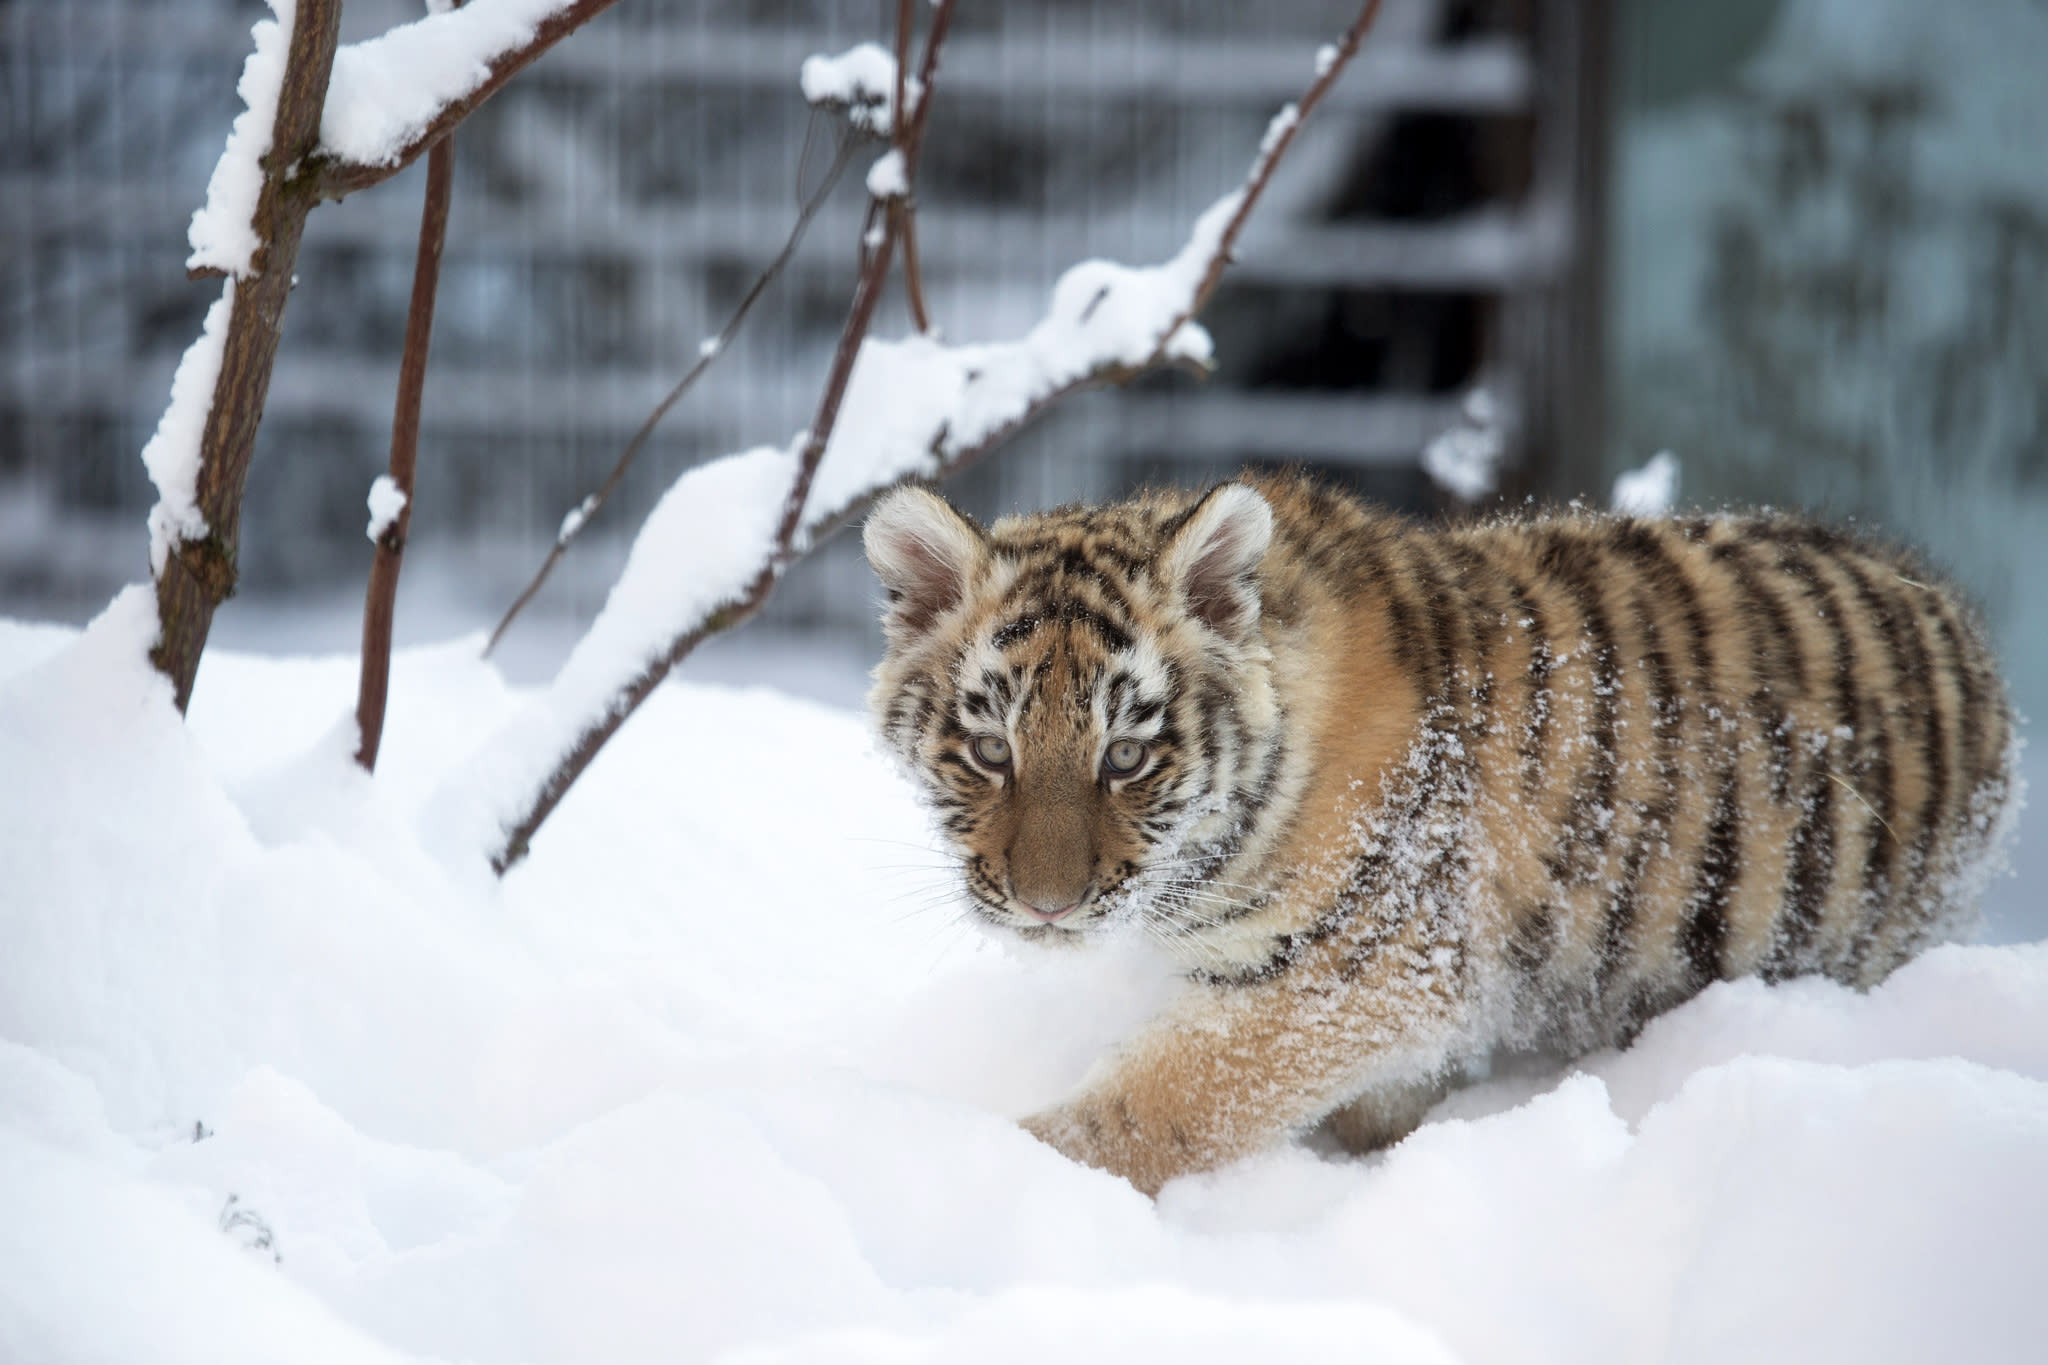 Anak harimau Amur Zoo Helsinki mati